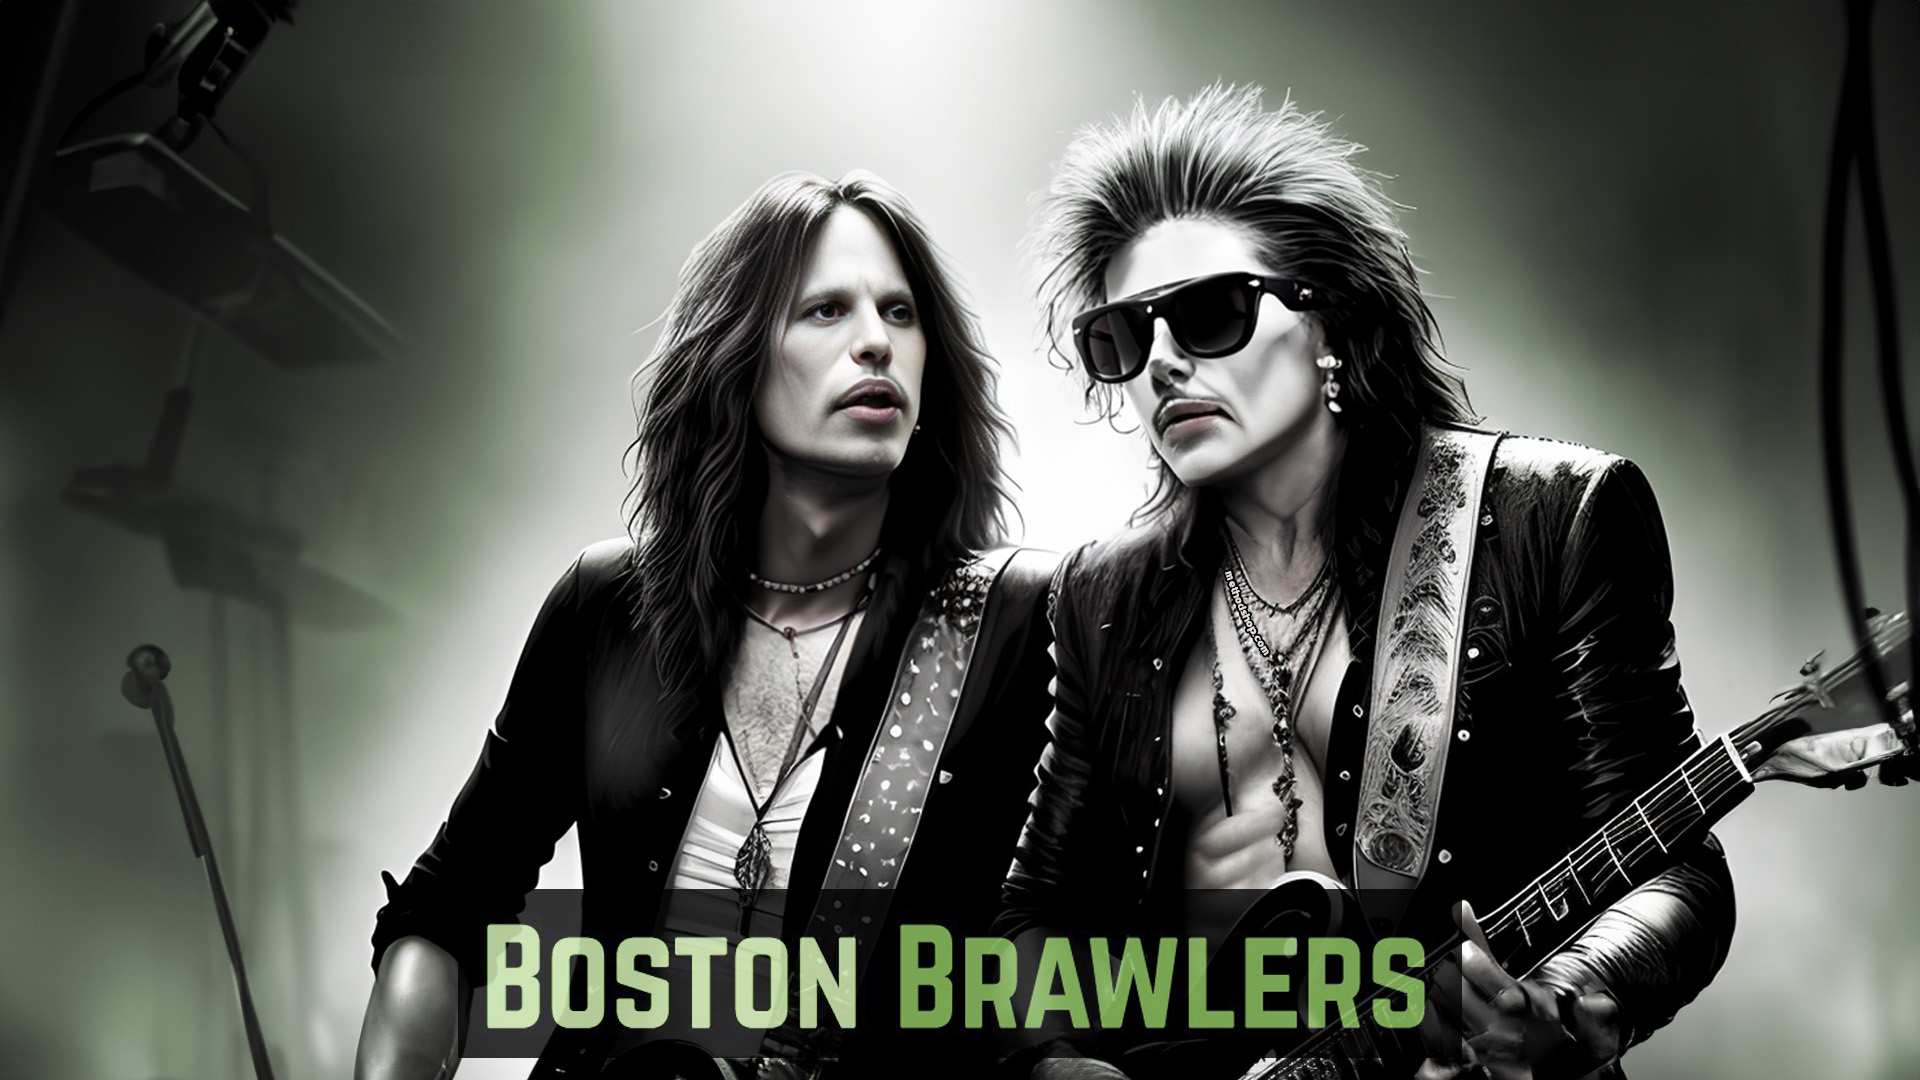 Alternate Aerosmith Band Name: Boston Brawlers